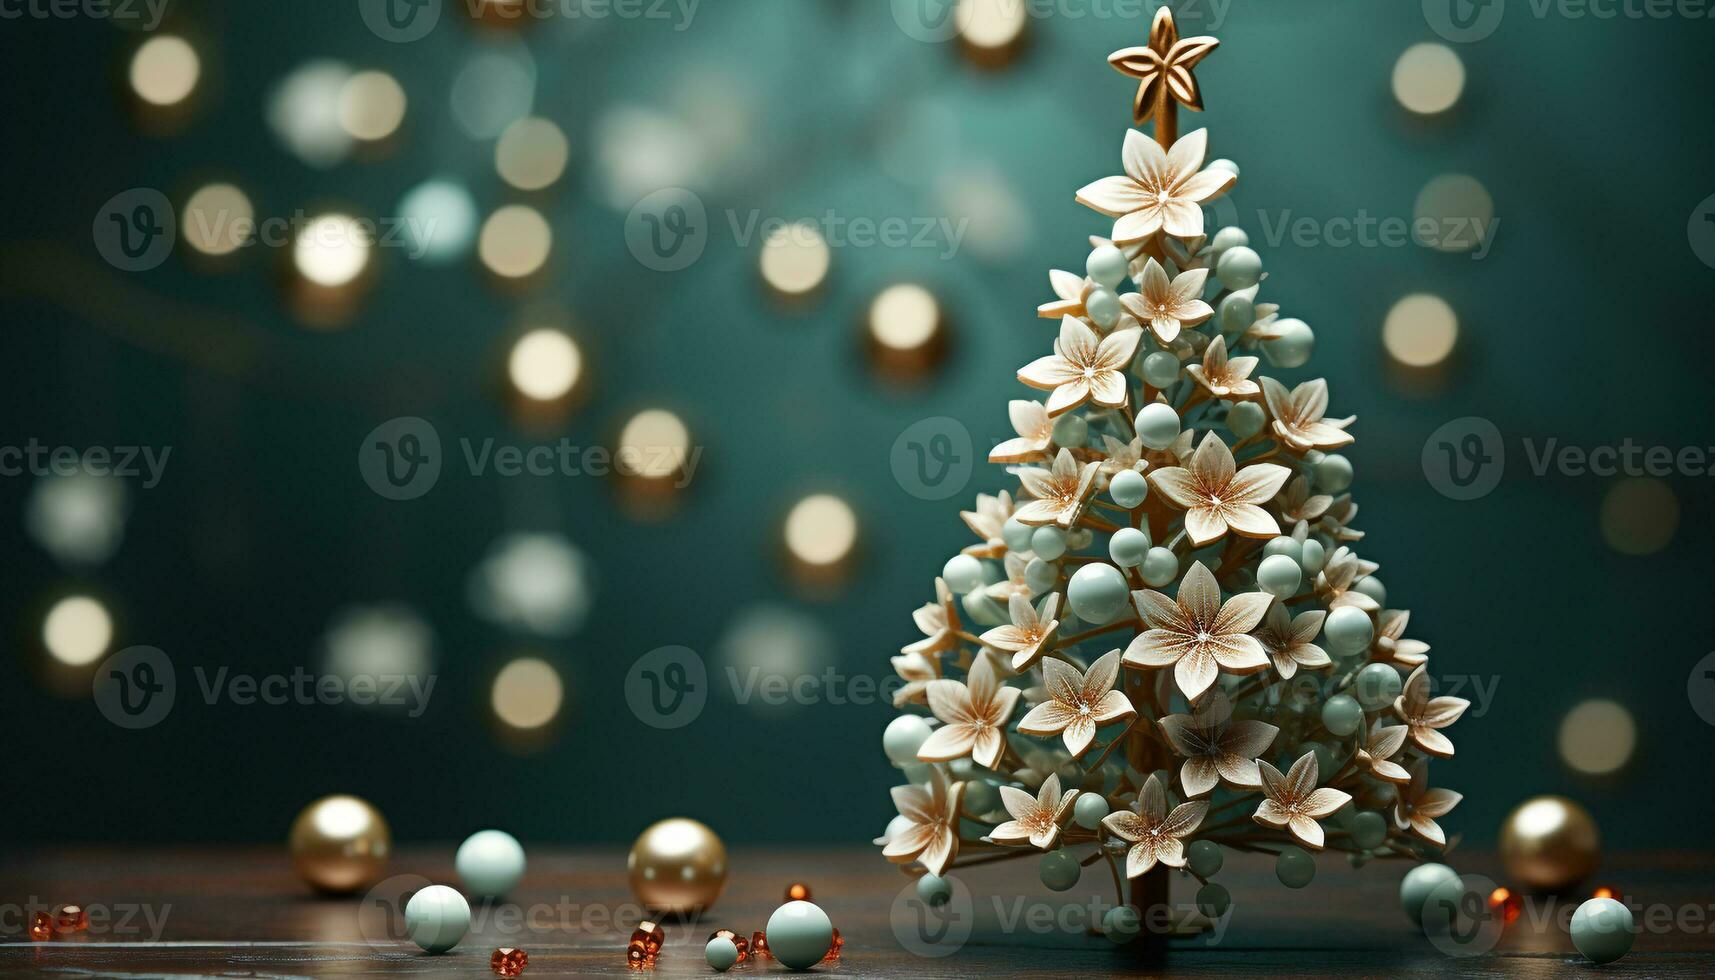 AI generated Christmas tree glowing with shiny ornaments, winter celebration illuminated generated by AI photo